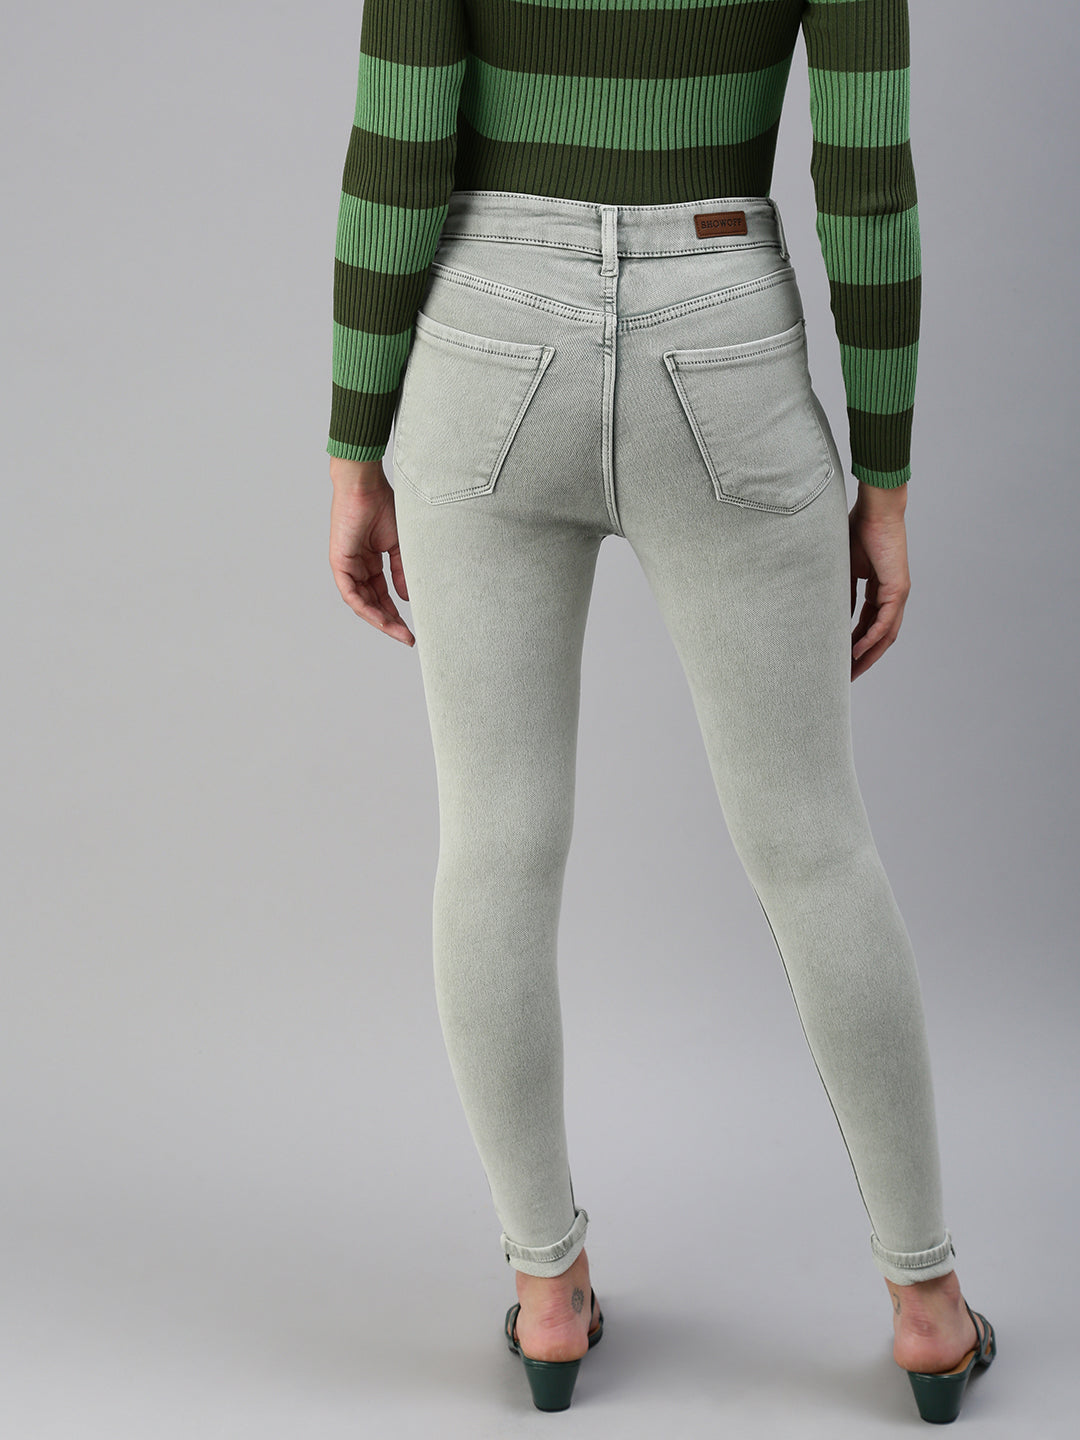 Women's Green Solid Denim Skinny Jeans